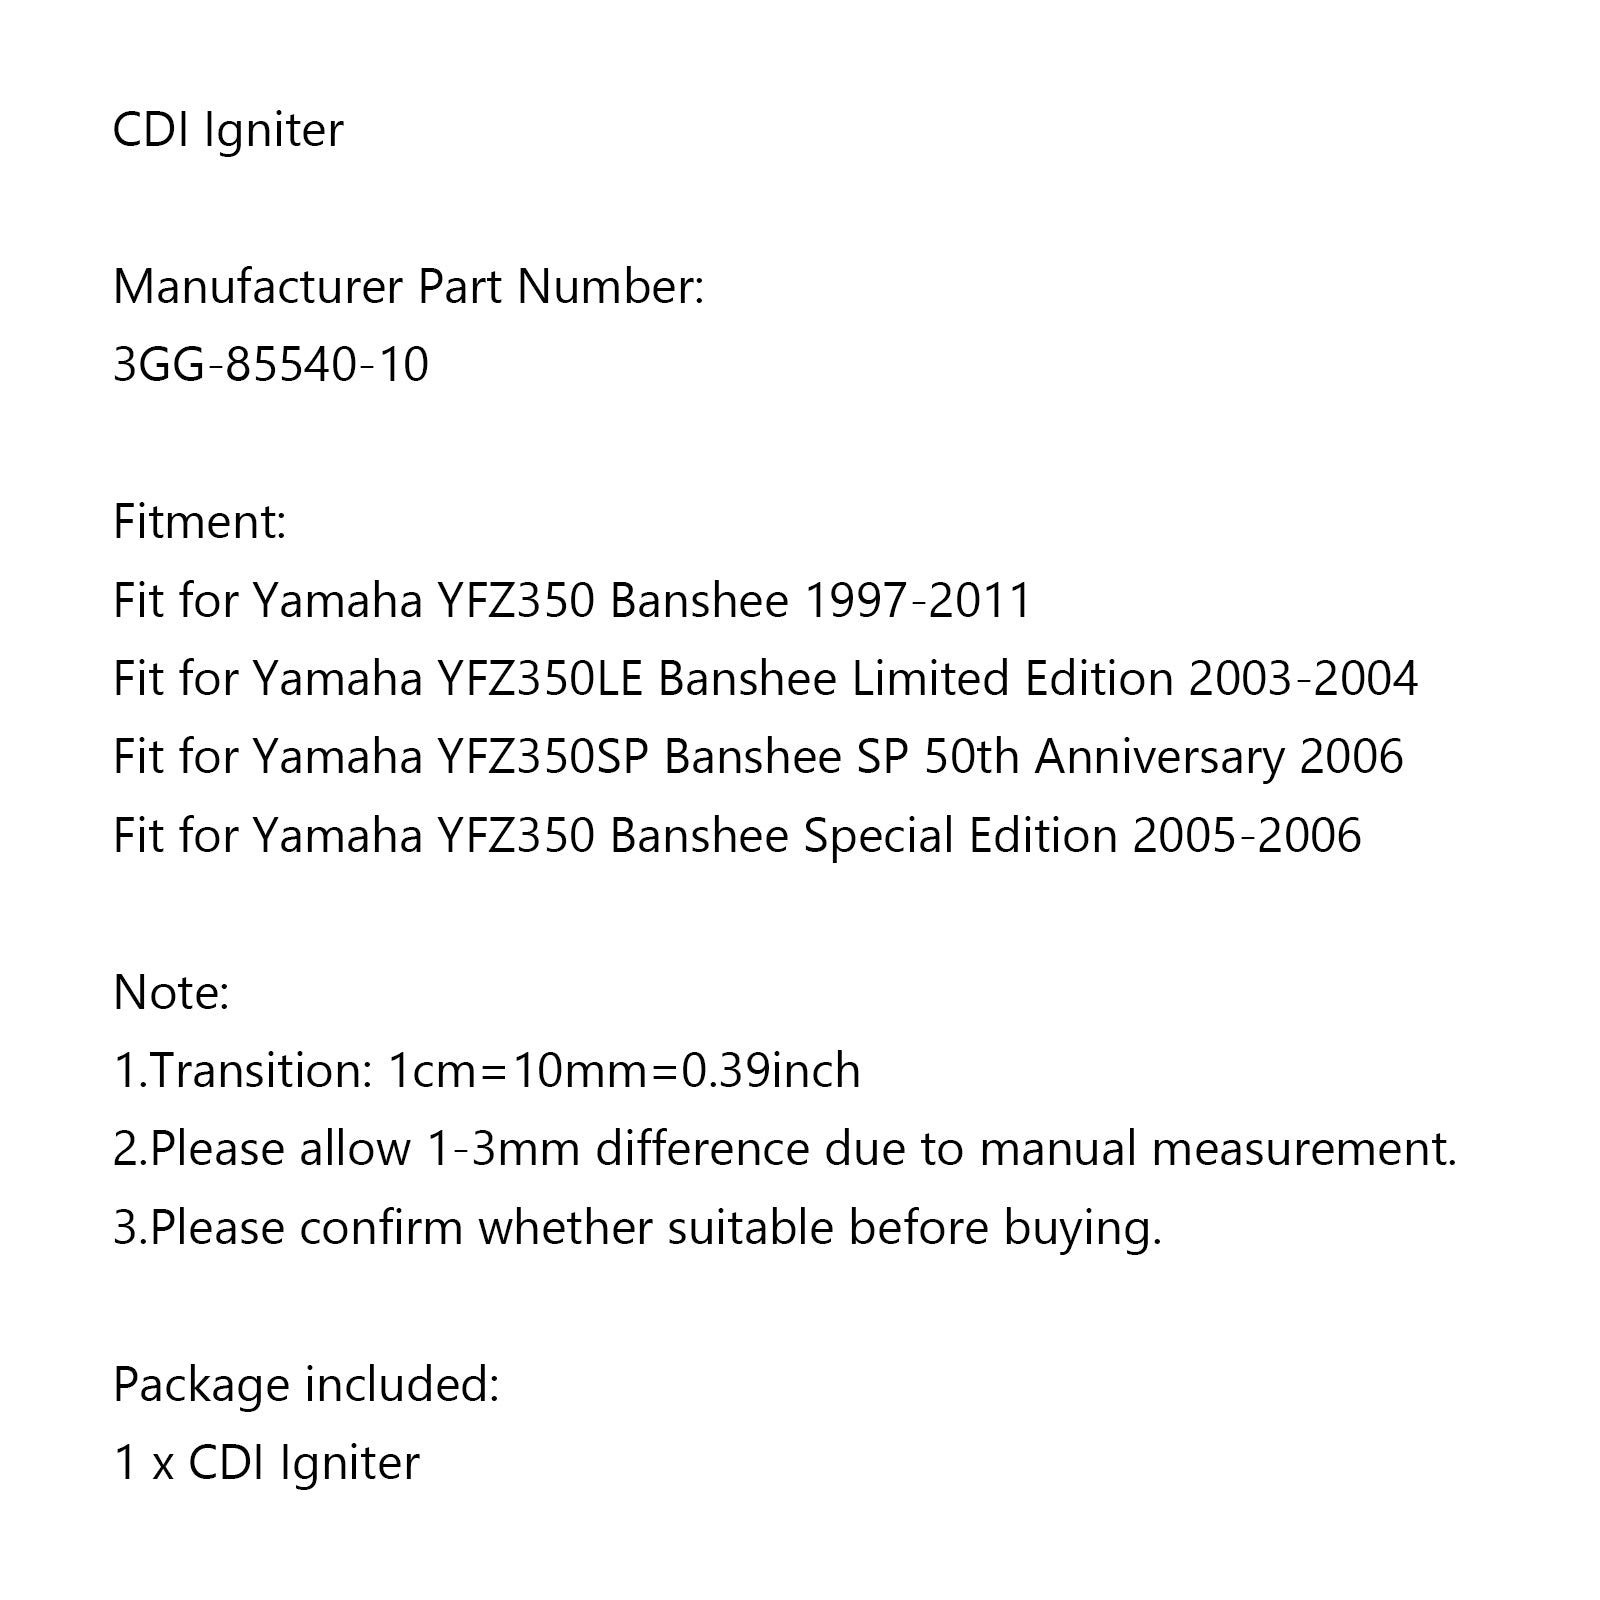 Accenditore CDI adatto per Yamaha YFZ350 Banshee YFZ350LE YFZ350SP 3GG-85540-10